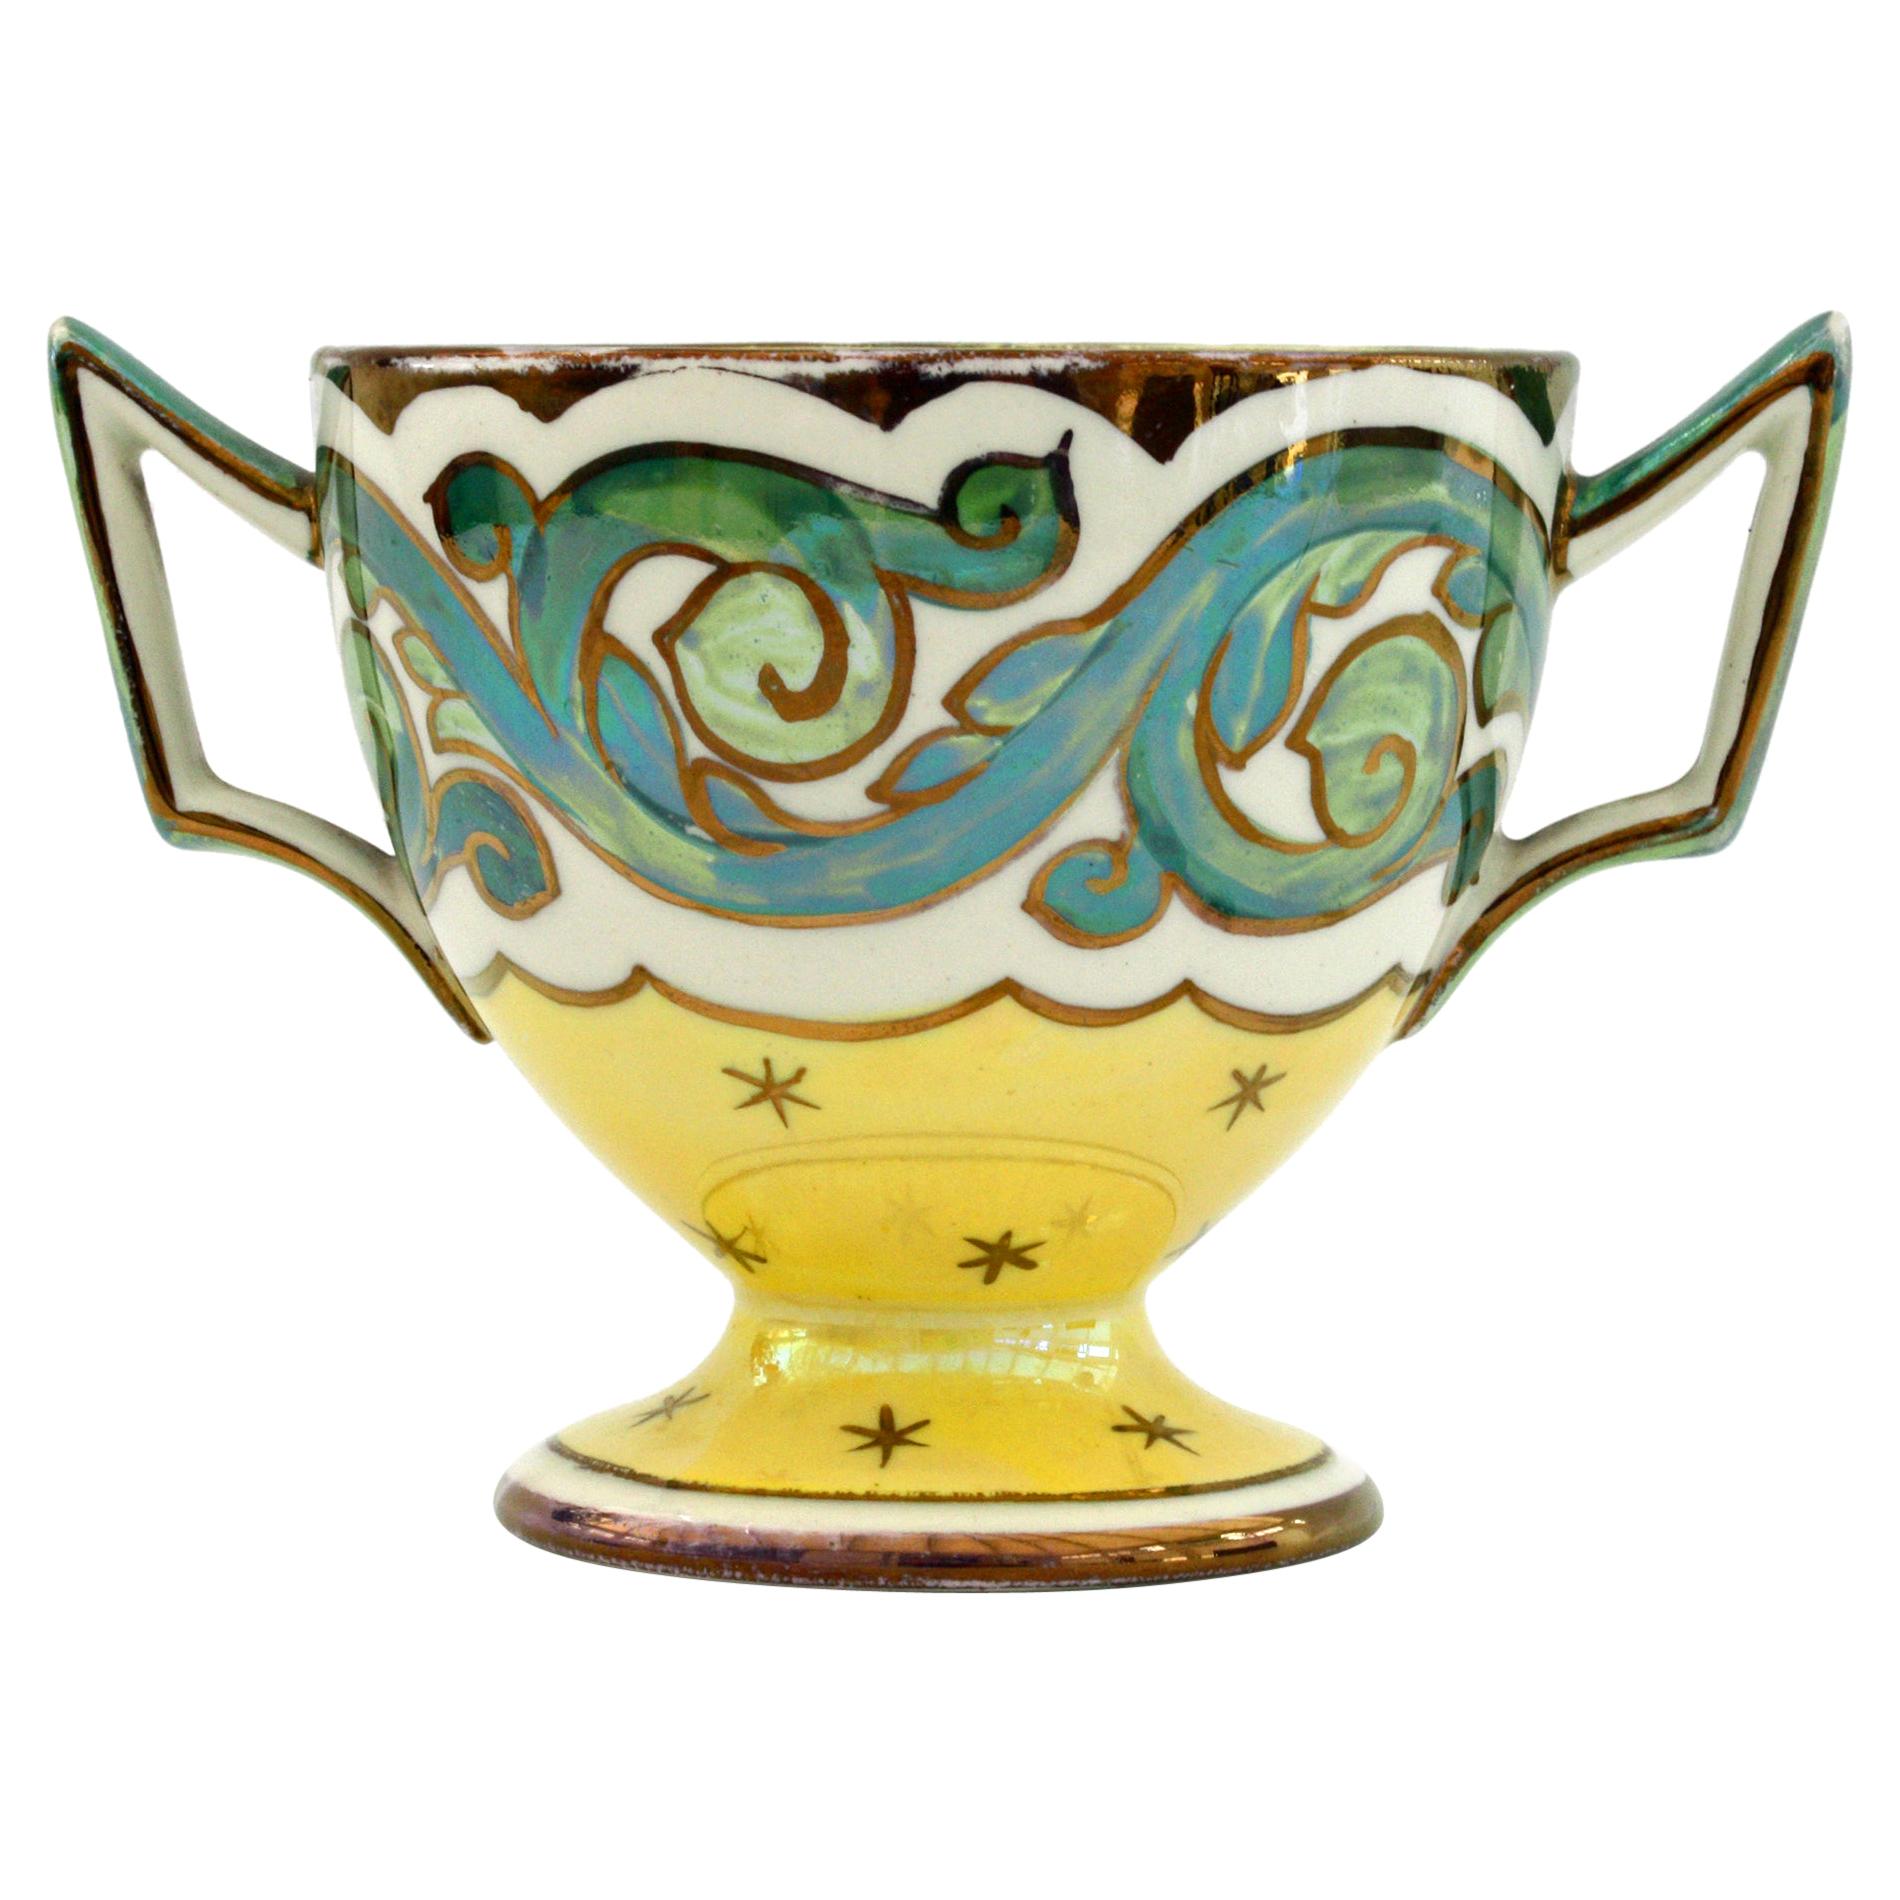 Wedgwood Art Nouveau Twin Handled Lustre Glazed Pedestal Cup, circa 1900